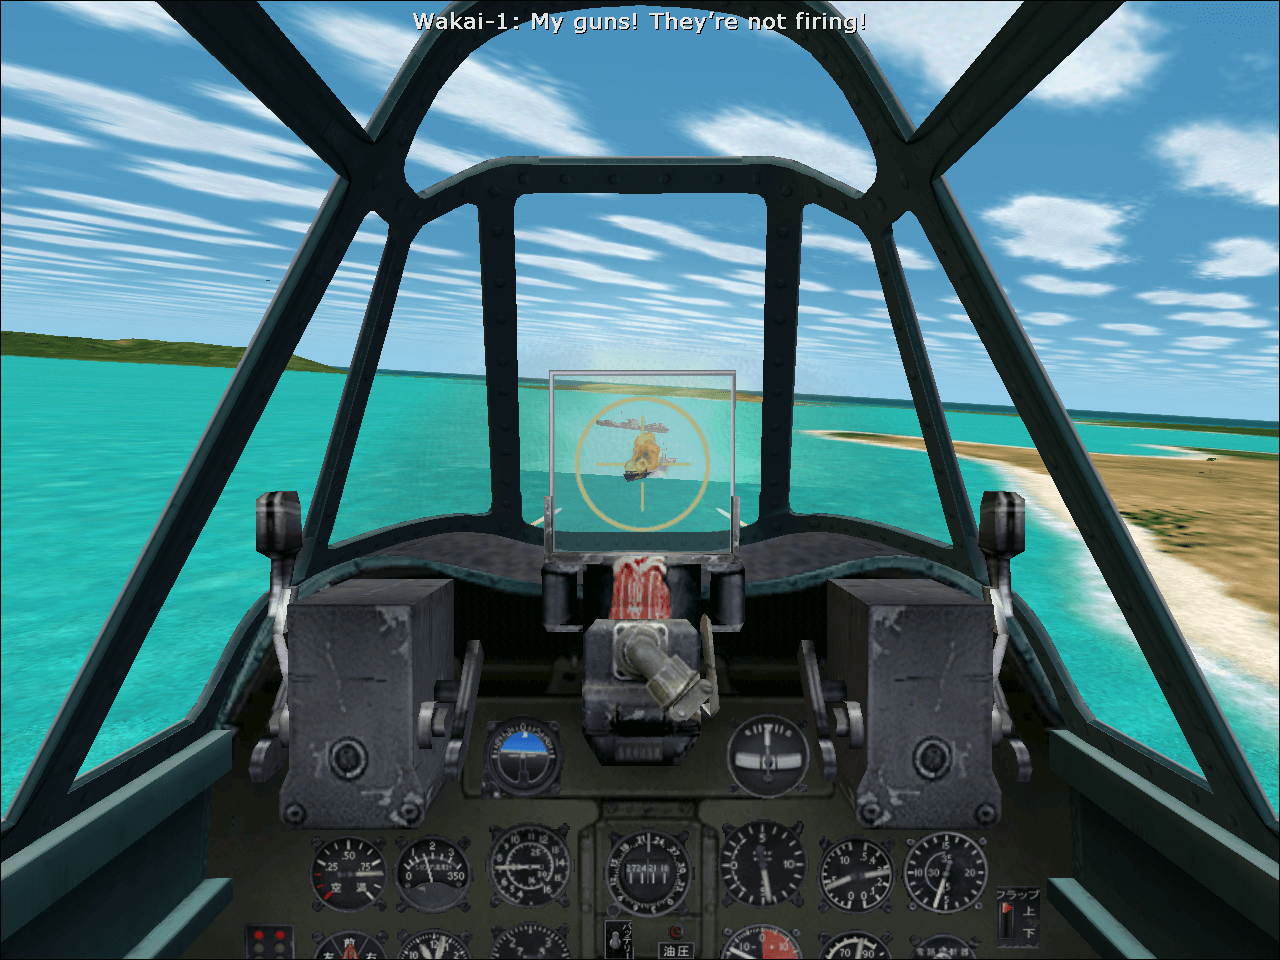 combat flight simulator 2 not working on windows 7